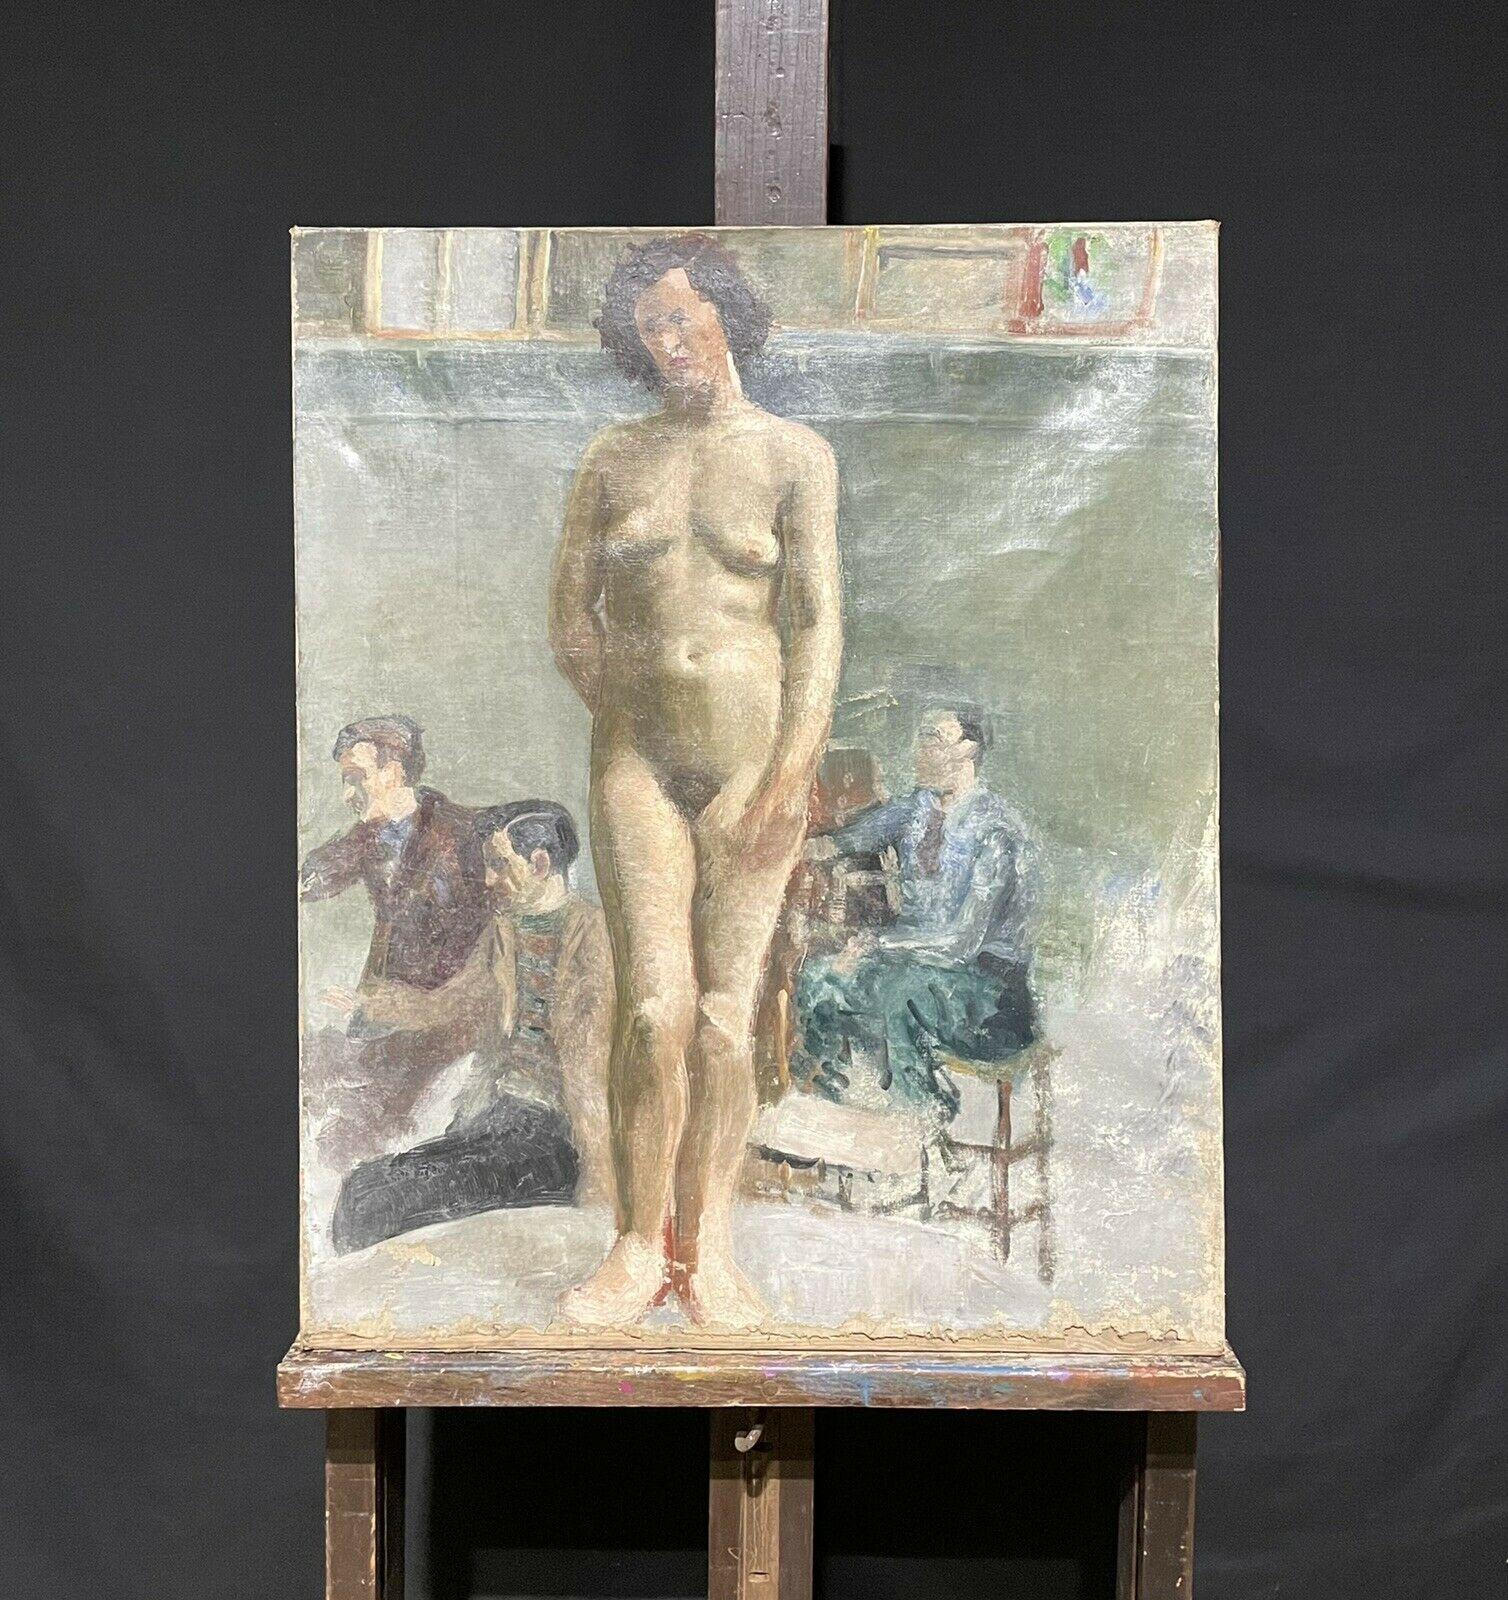 OIL BRITISH MODERN des années 1930 - CLASS ARTISTS STUDIO STILL LIFE ART CLASS WITH NUDE MODEL - Painting de British School